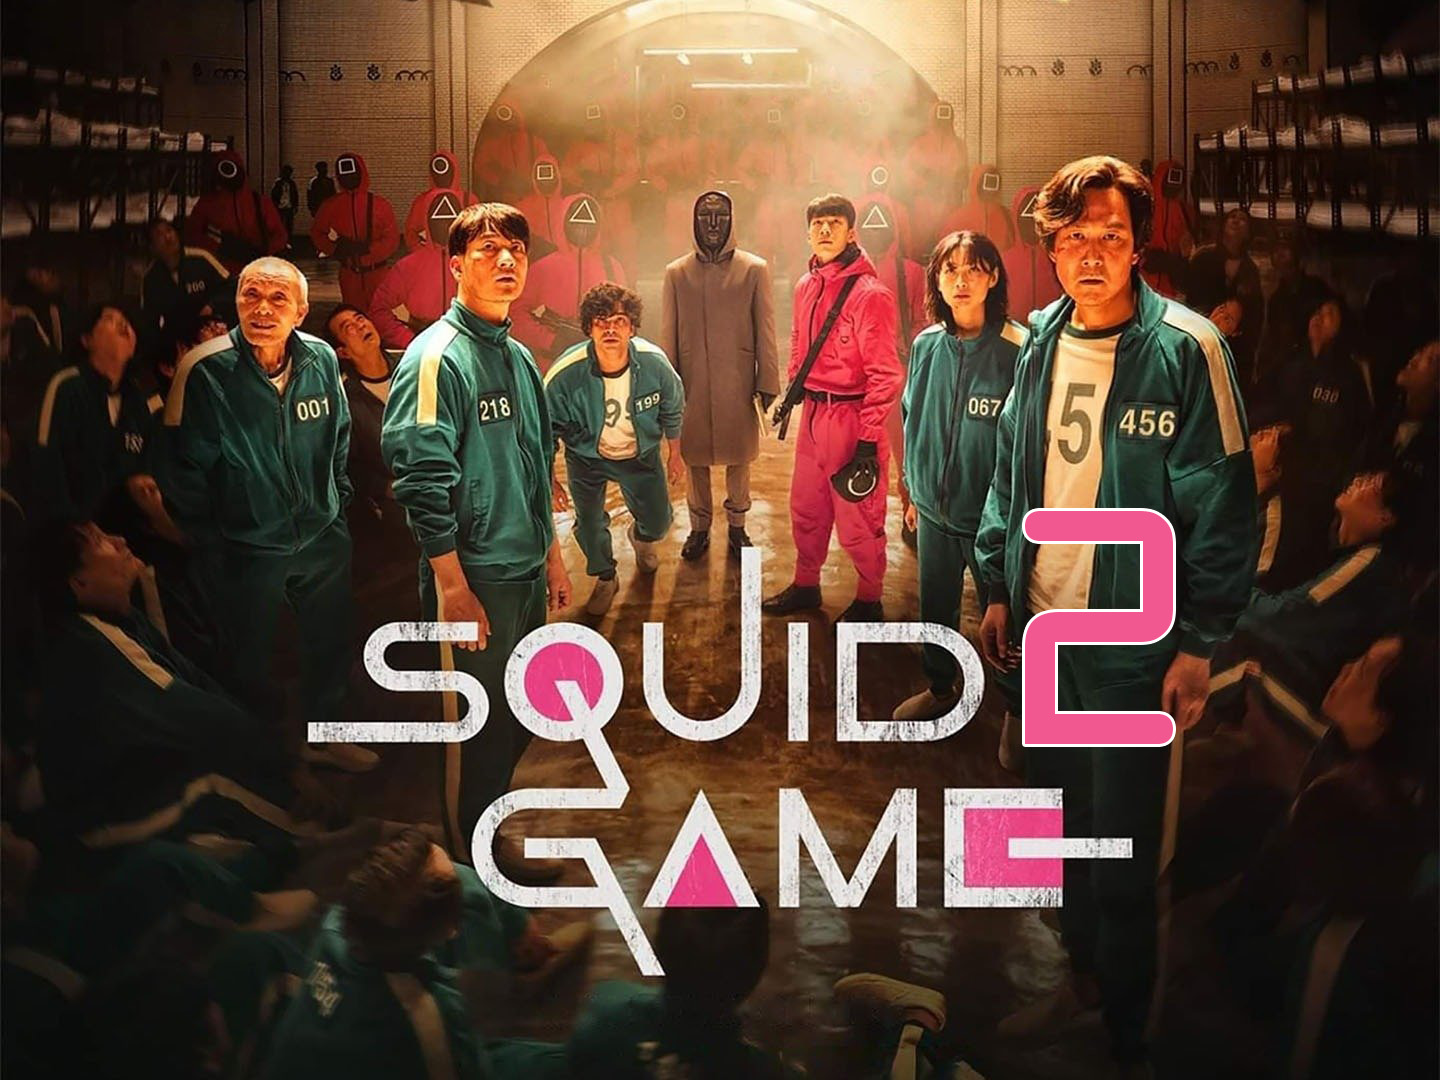 'Squid Game' season 2 confirmed by creator Hwang Dong-hyuk